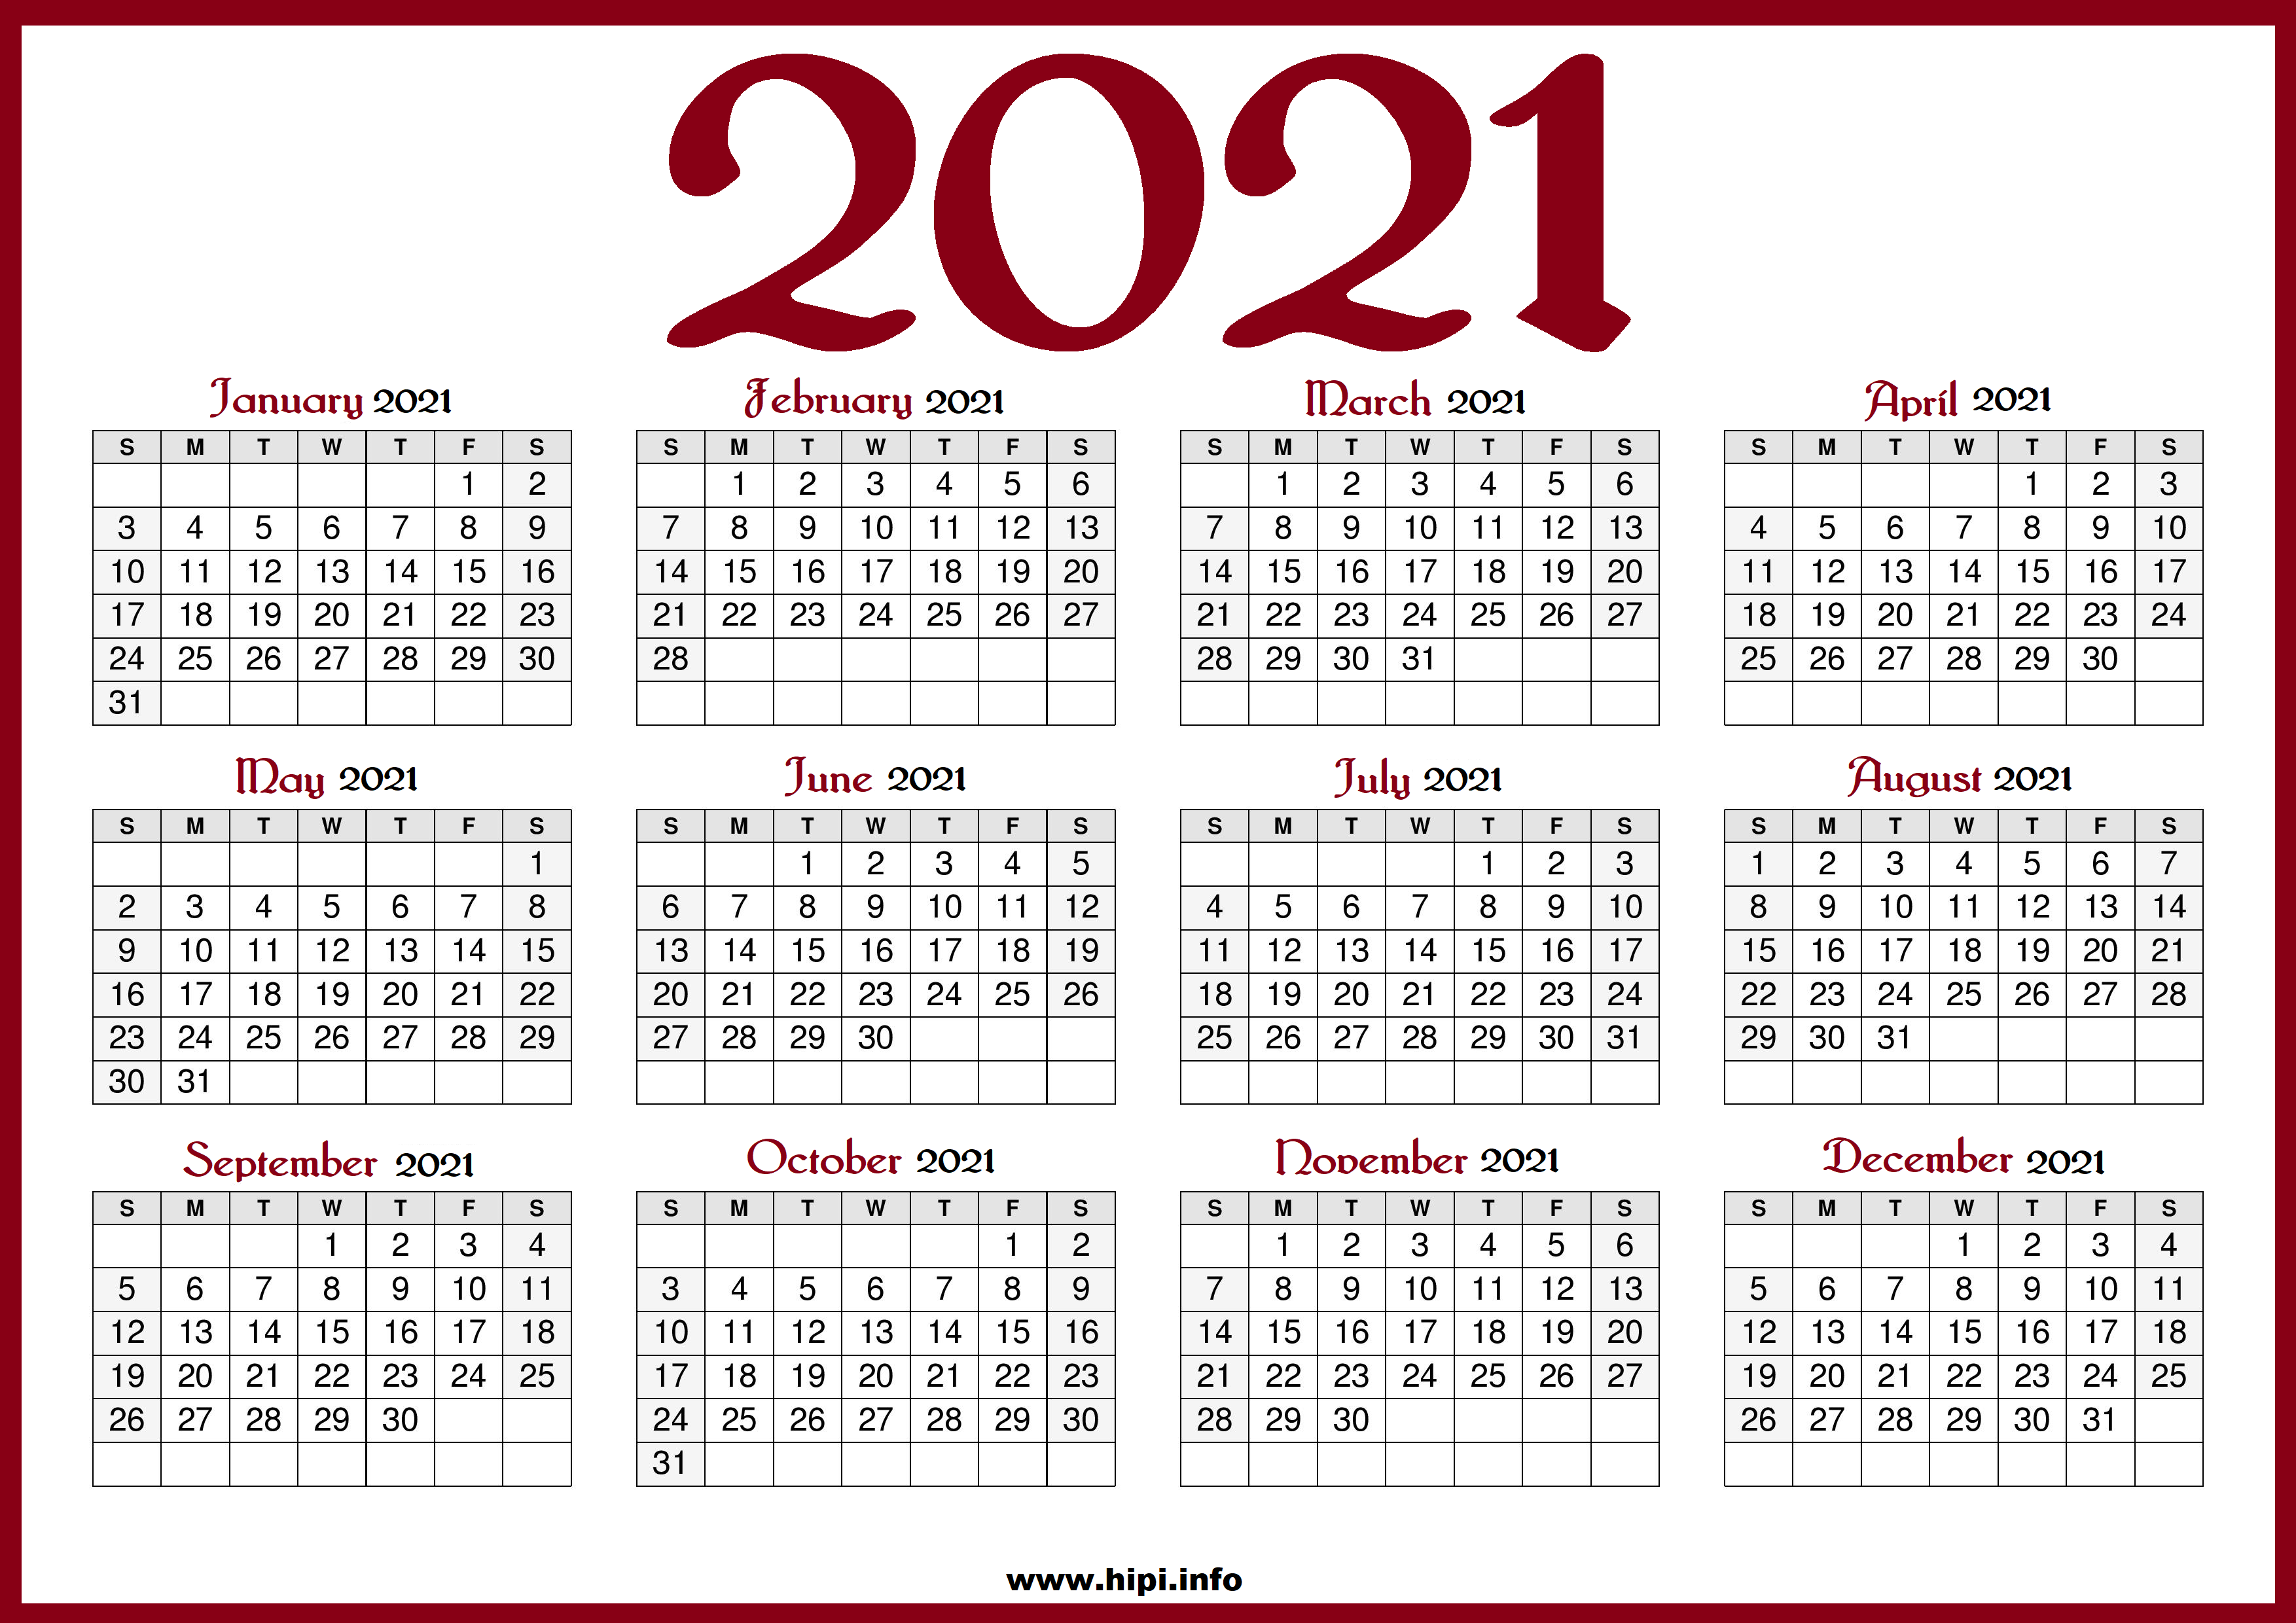 Us Holiday Calendar 2021 Printable 2021 Calendar with US Holidays   Red color   Hipi.info